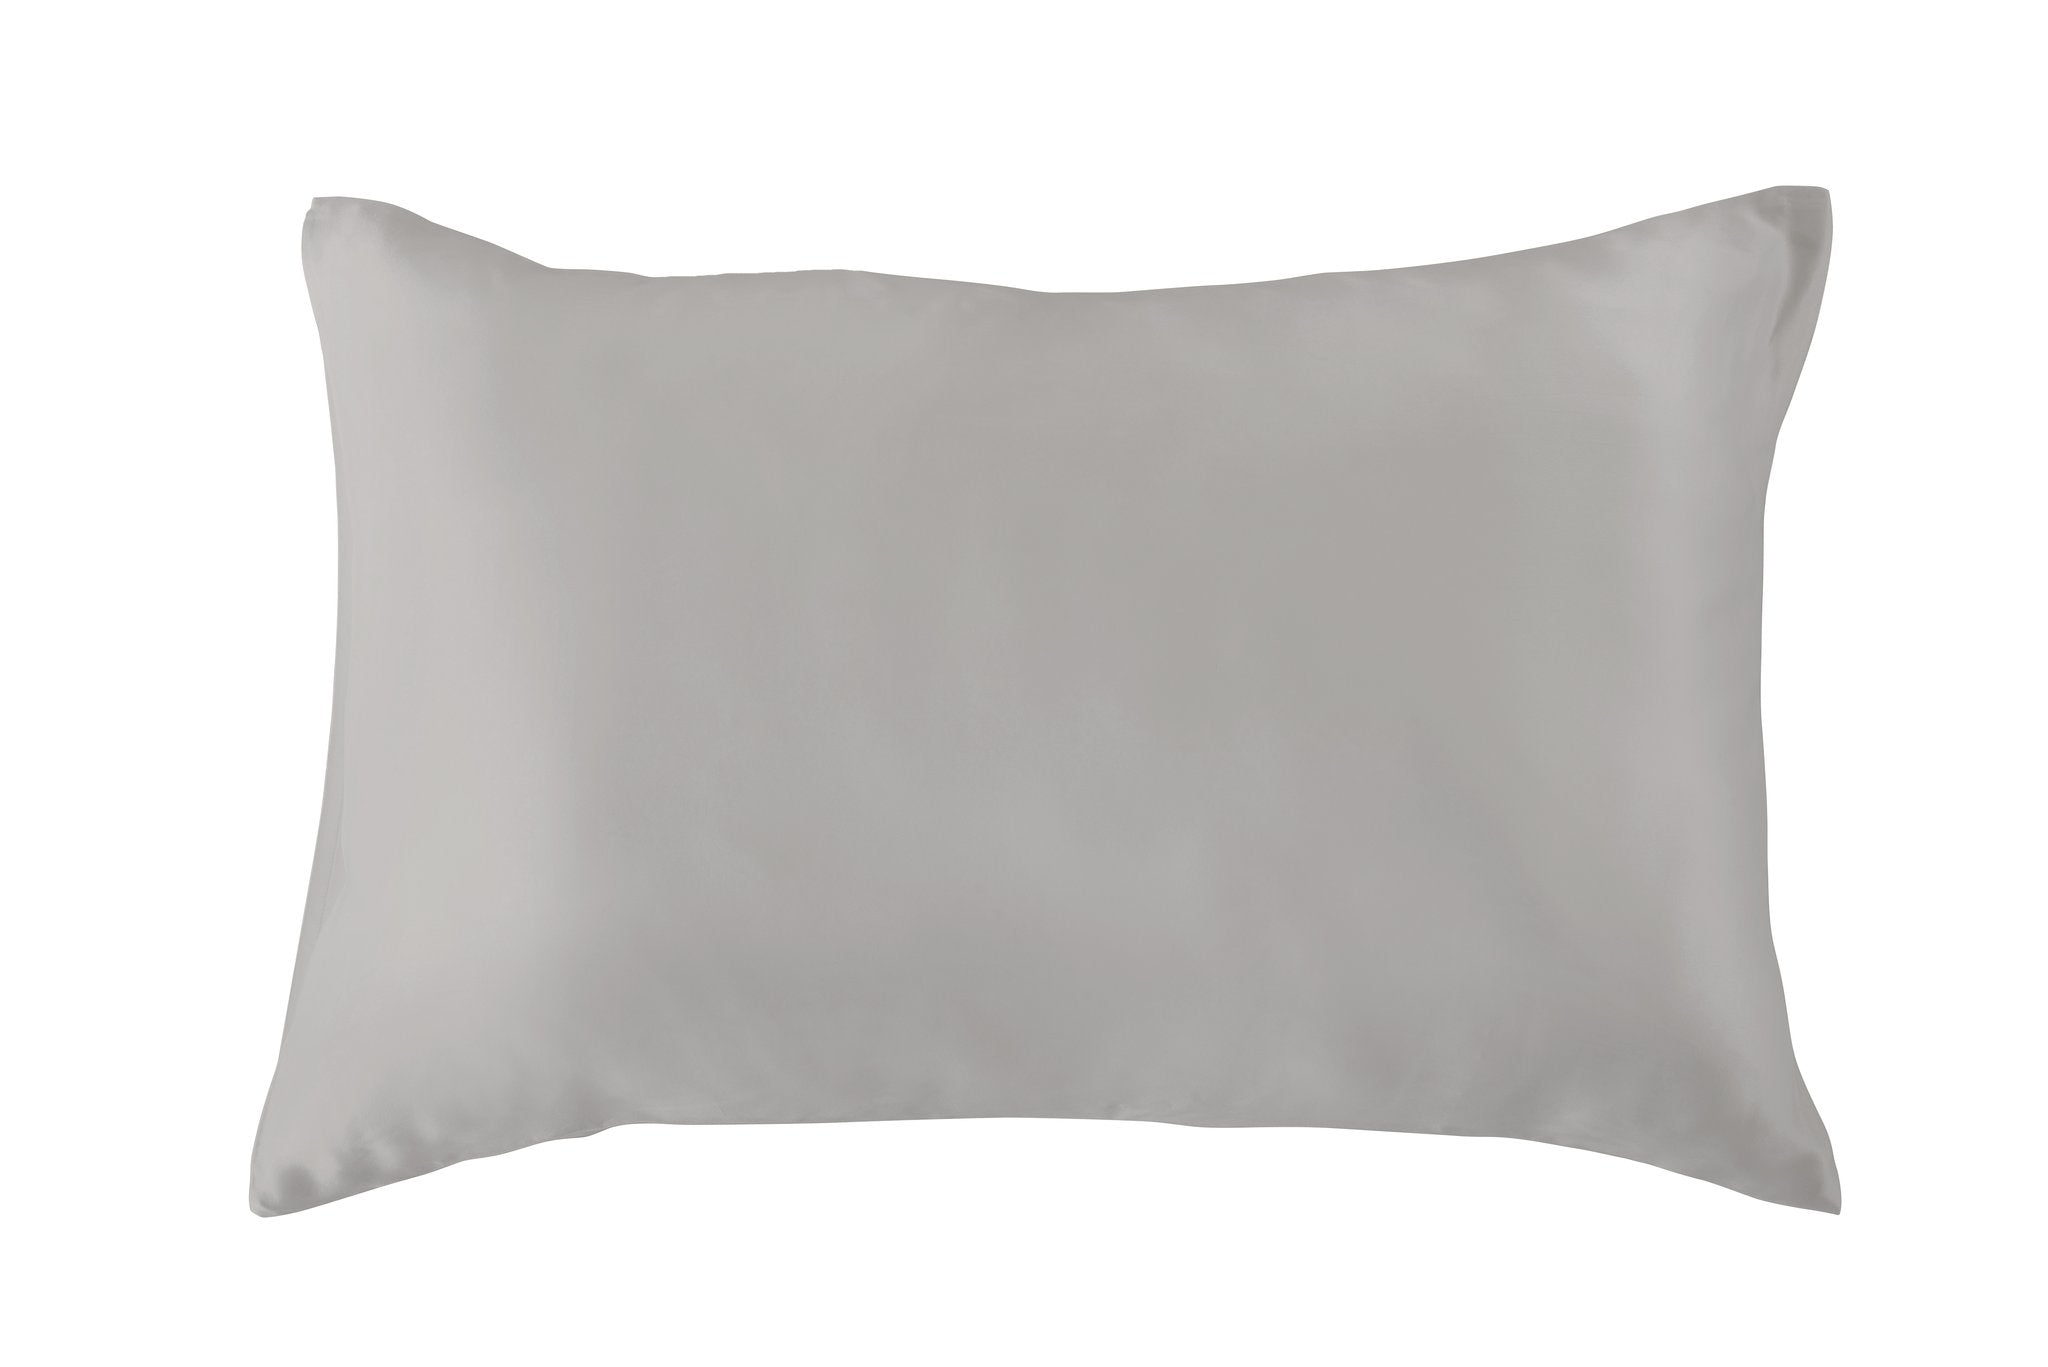 100% Pure Mulberry Silk Pillowcase- color Silver Grey - $85.00